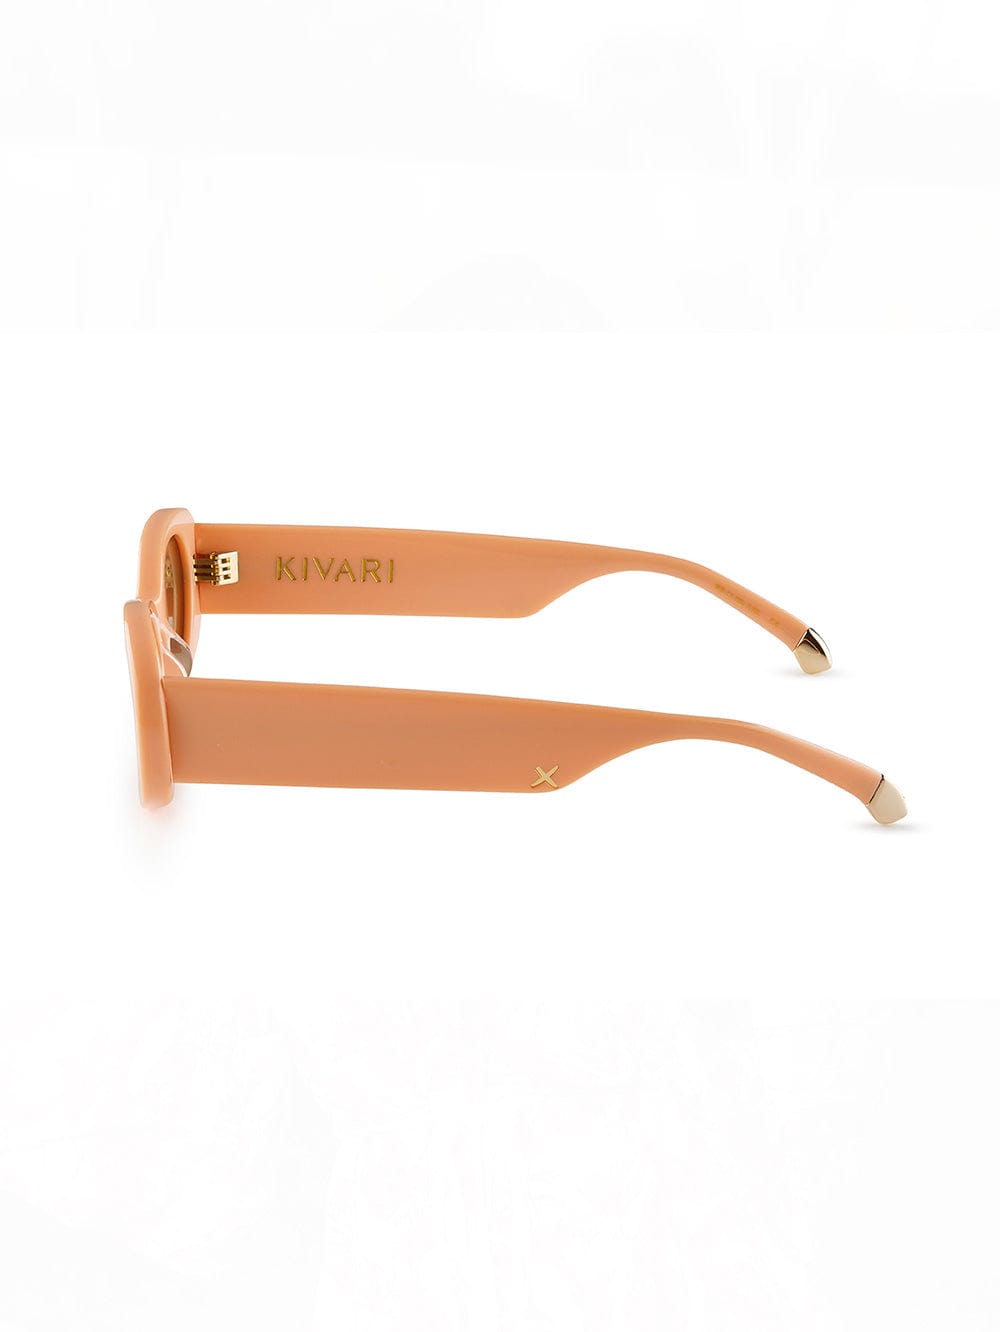 KIVARI X OXF - Citra Sunglasses